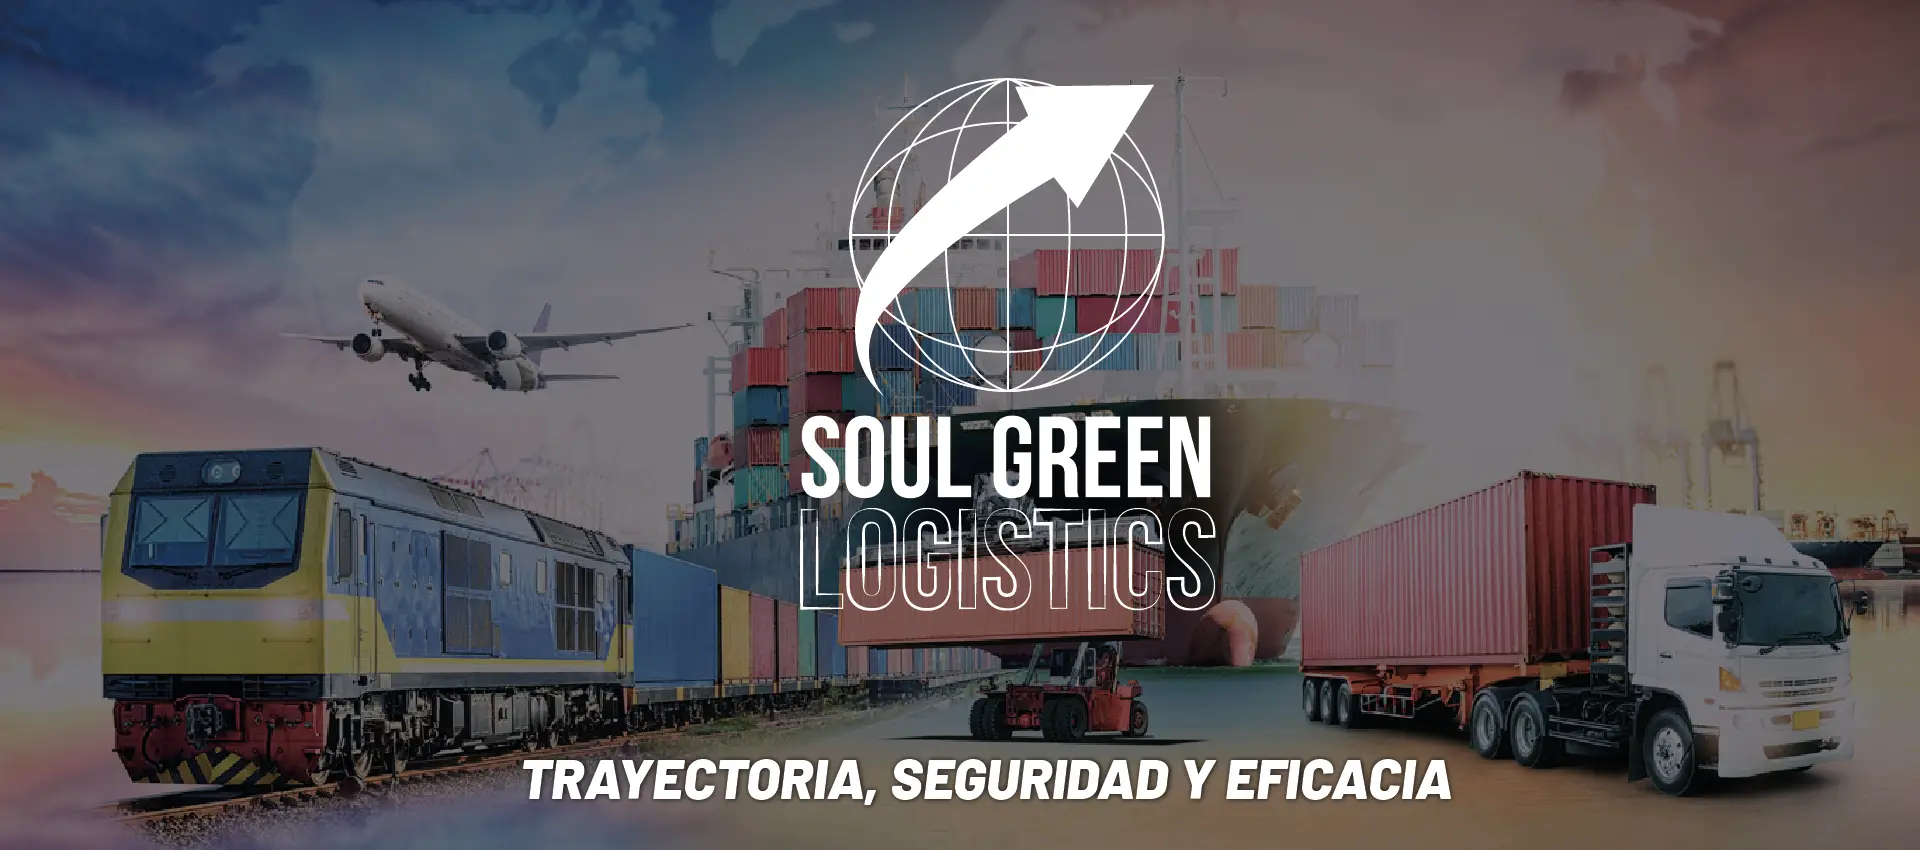 Soul Green Logistics, agente de carga internacional.